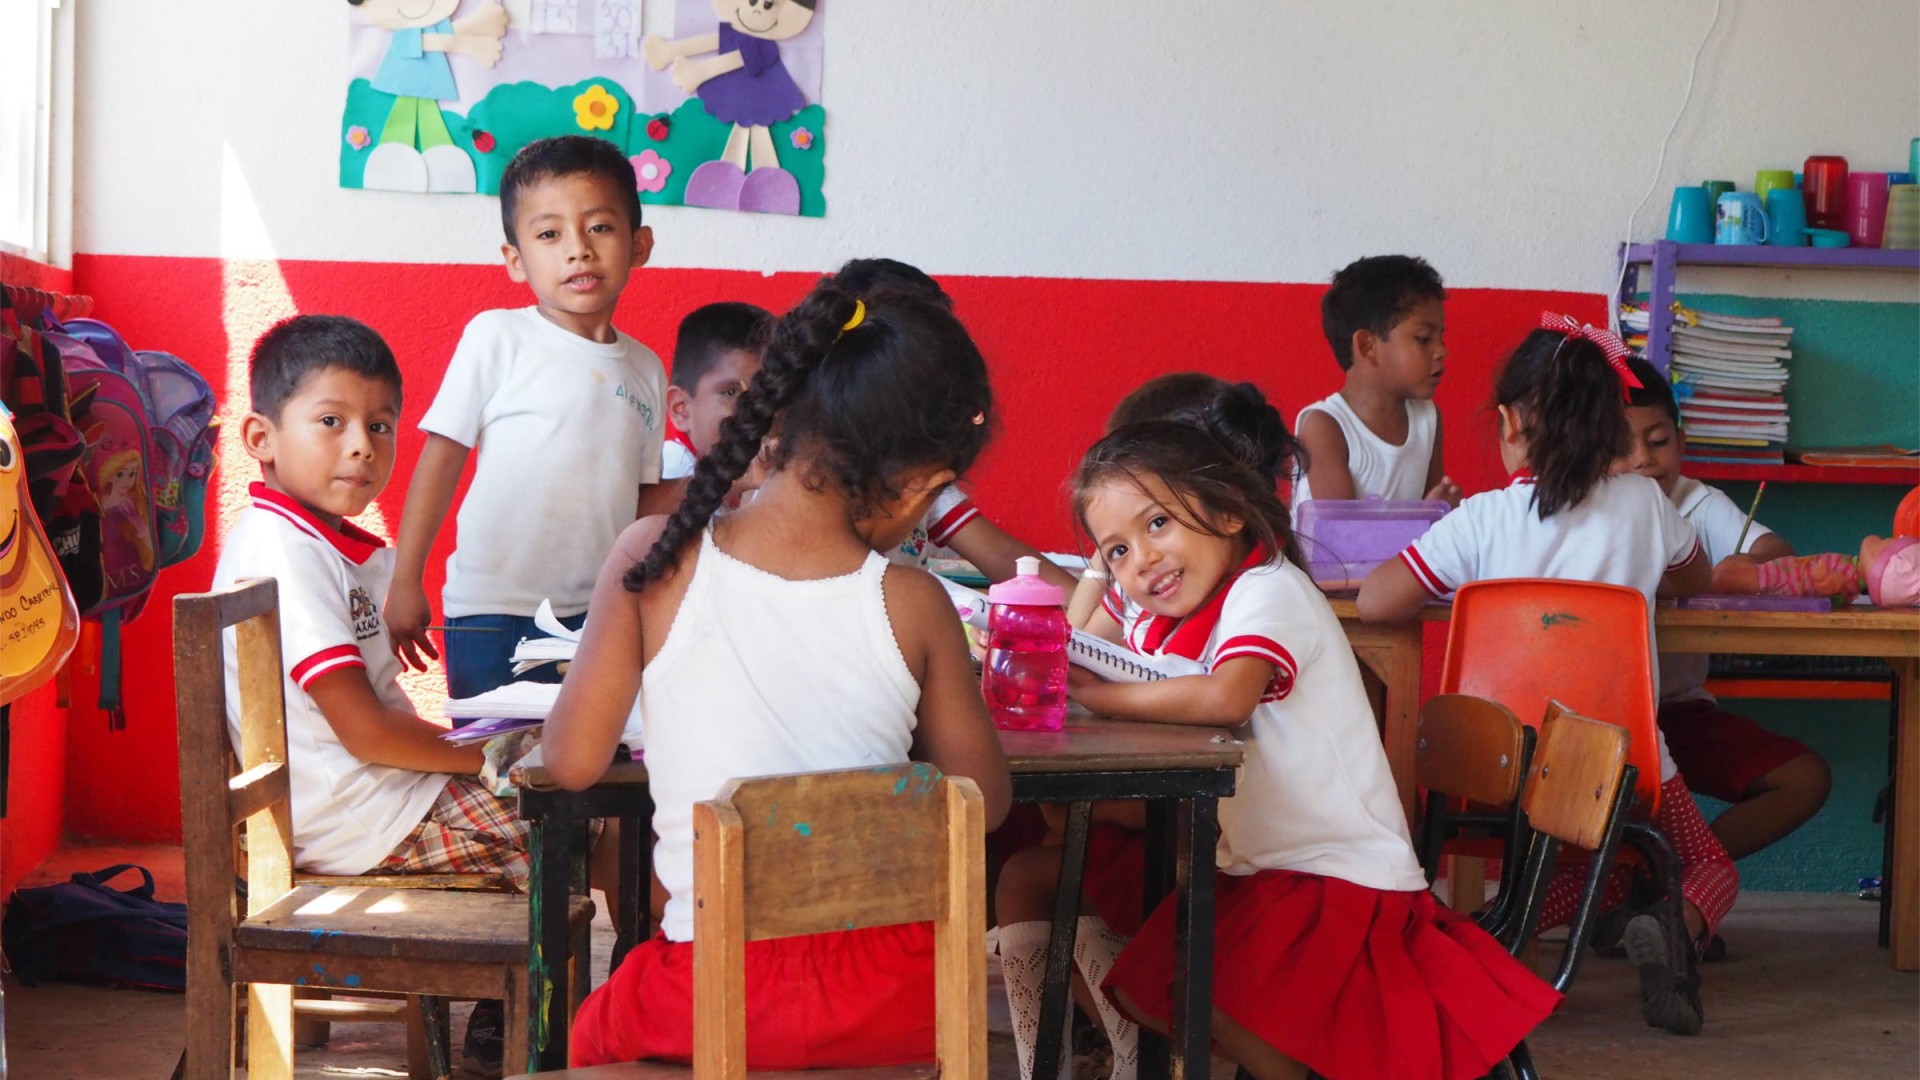 Sozialarbeit mit Kindern in Mexiko